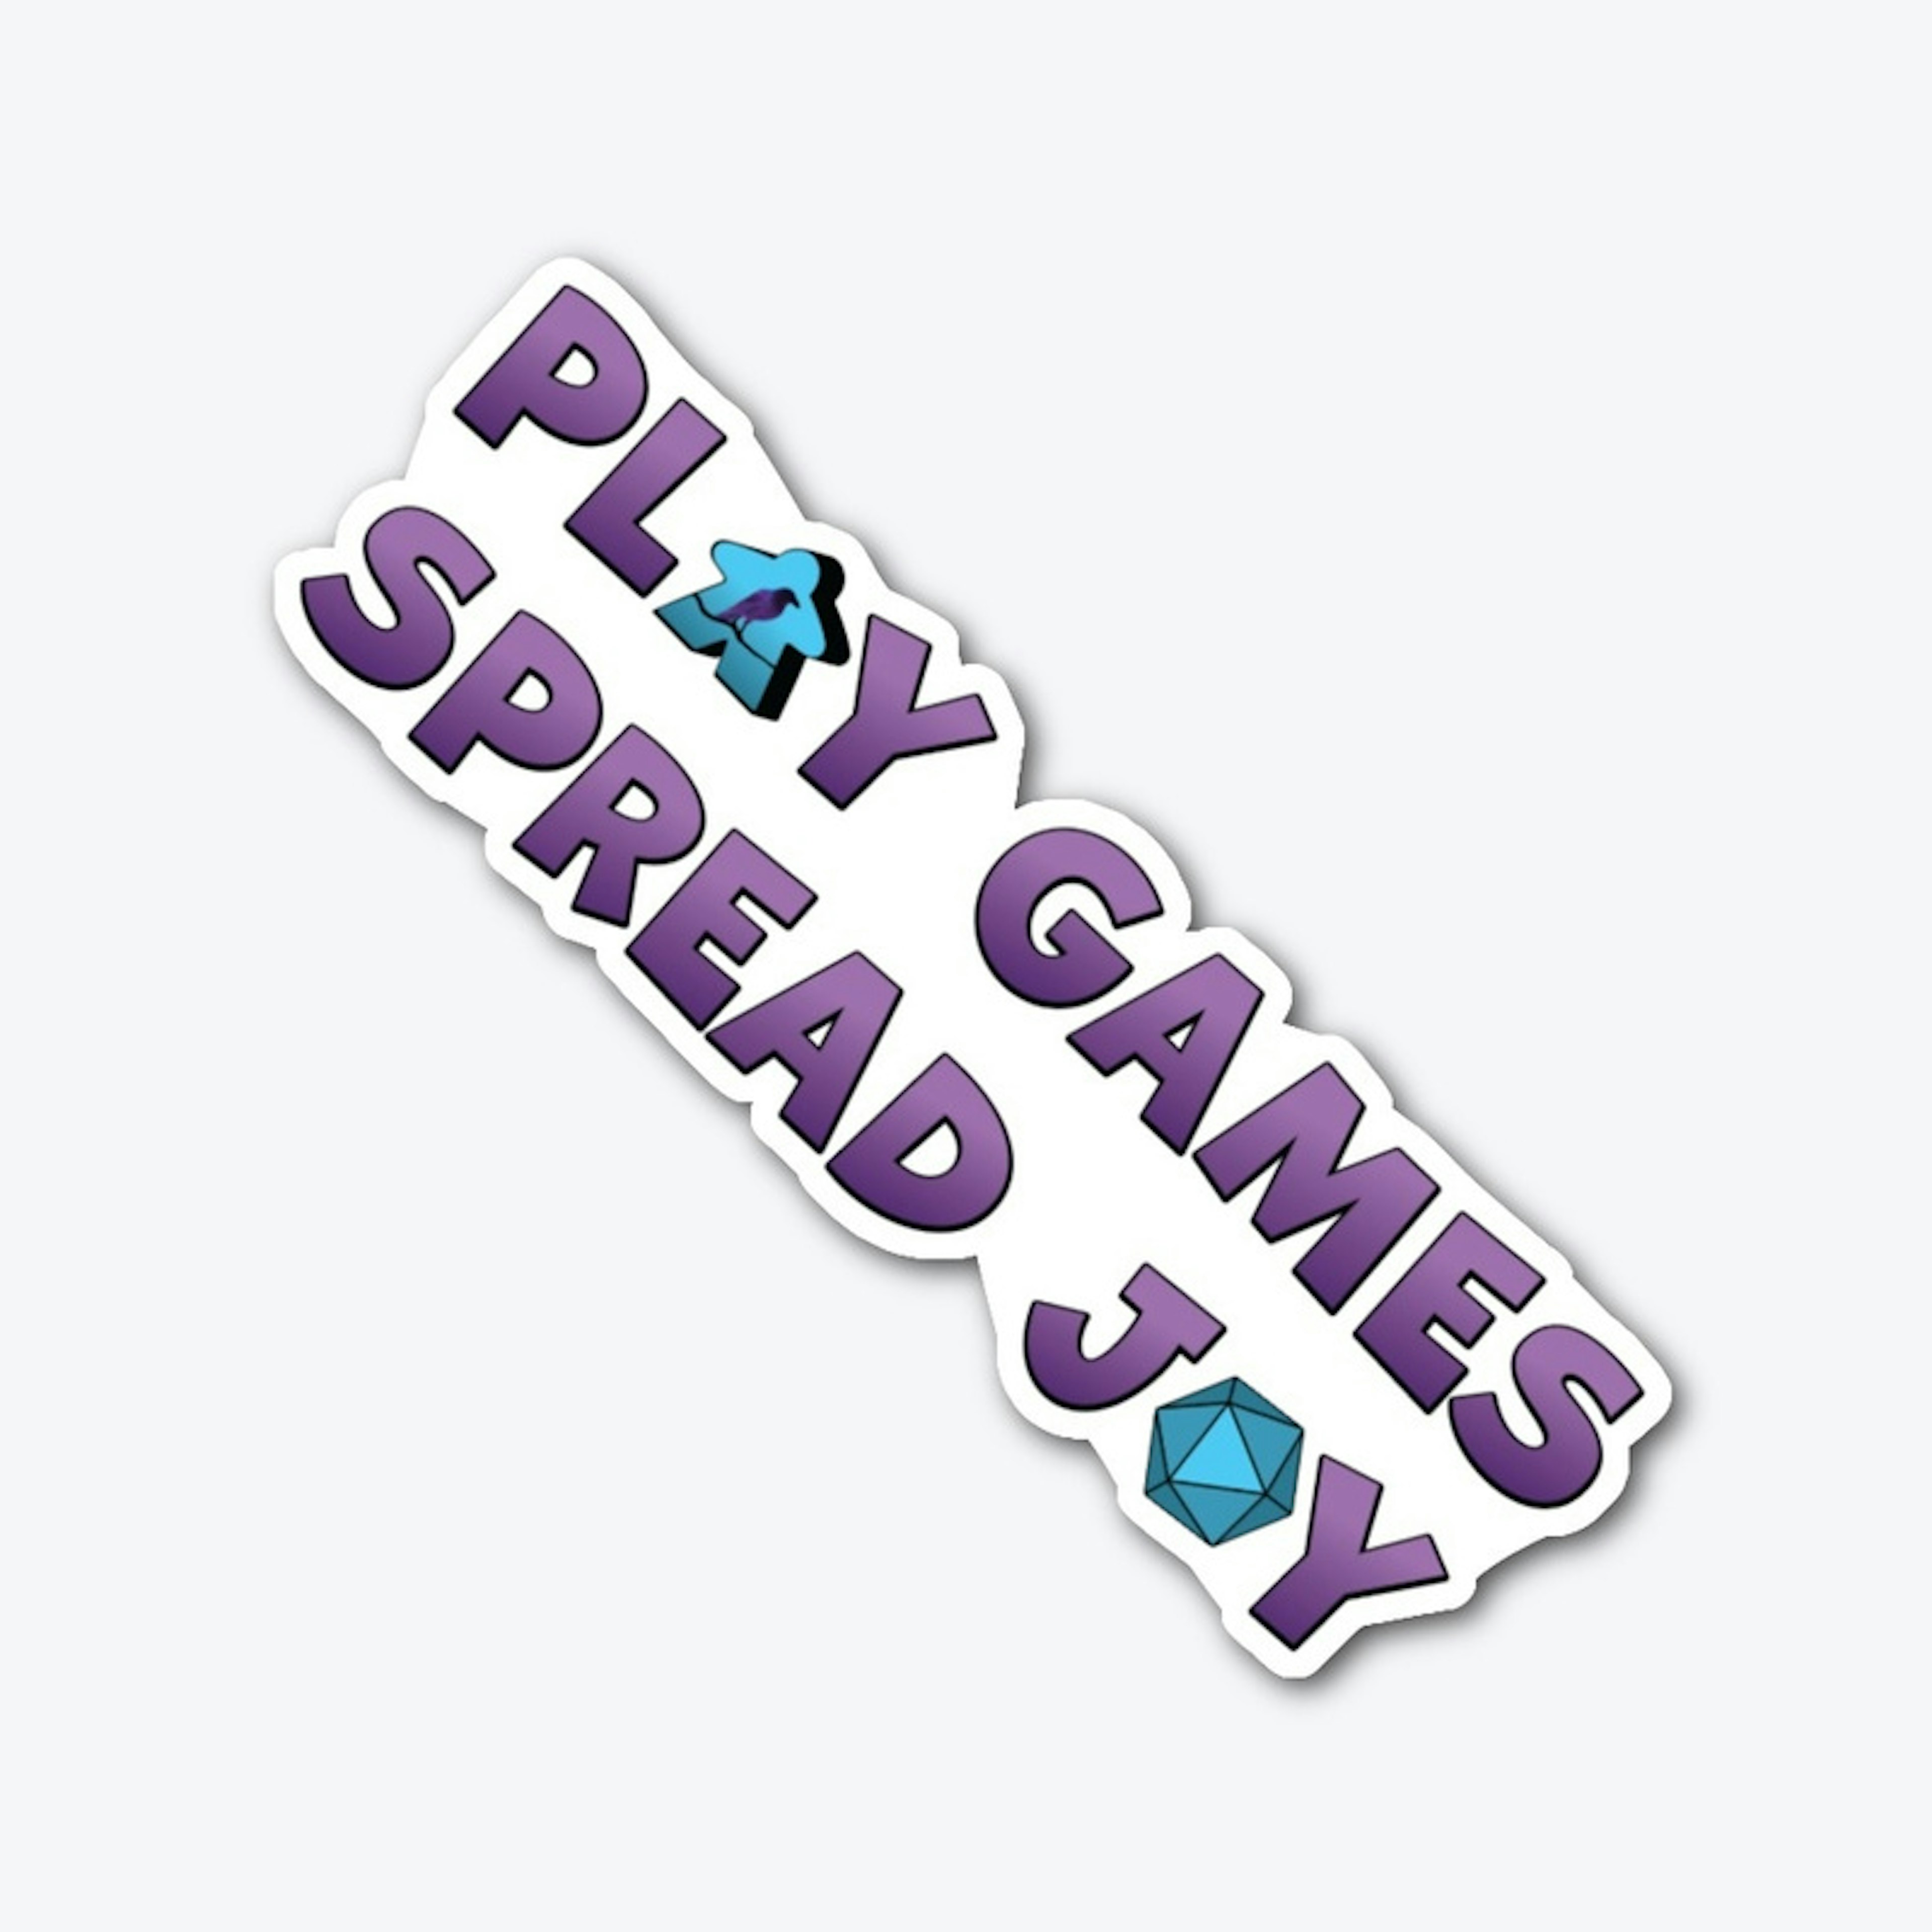 Play Games Spread Joy Sticker